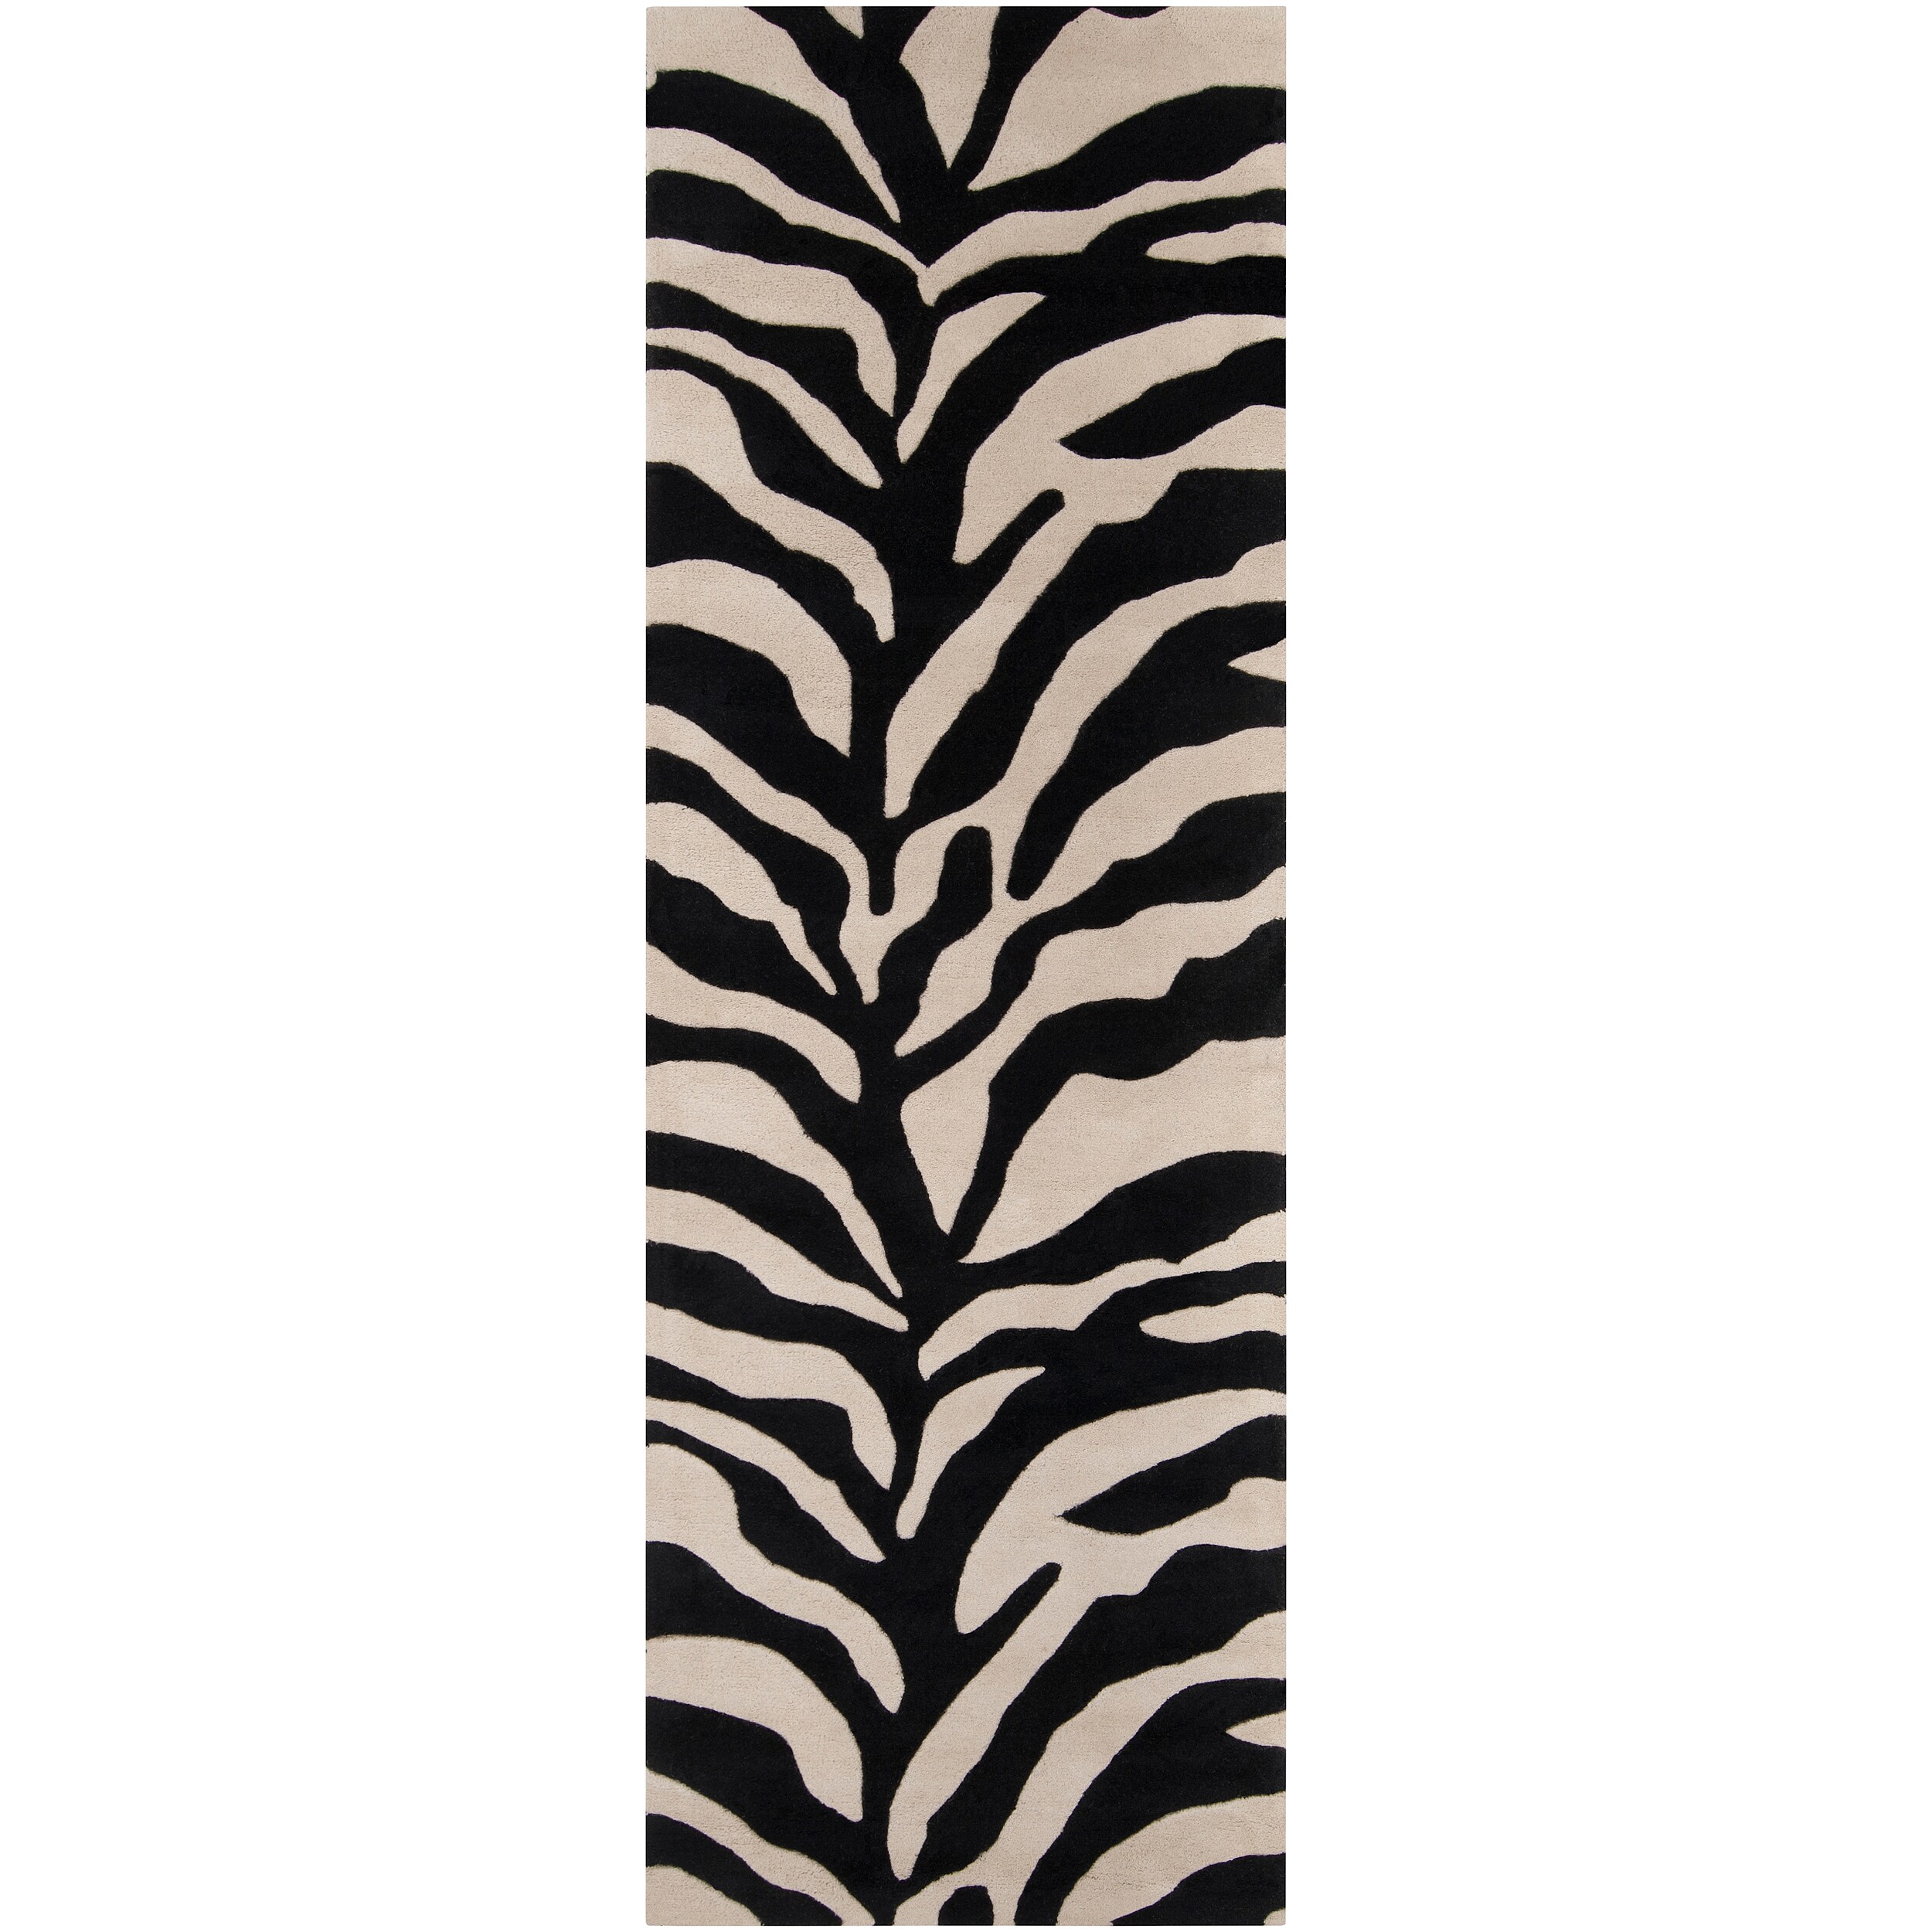 Hand tufted Black/white Zebra Animal Print Morph Wool Rug (26 X 8)